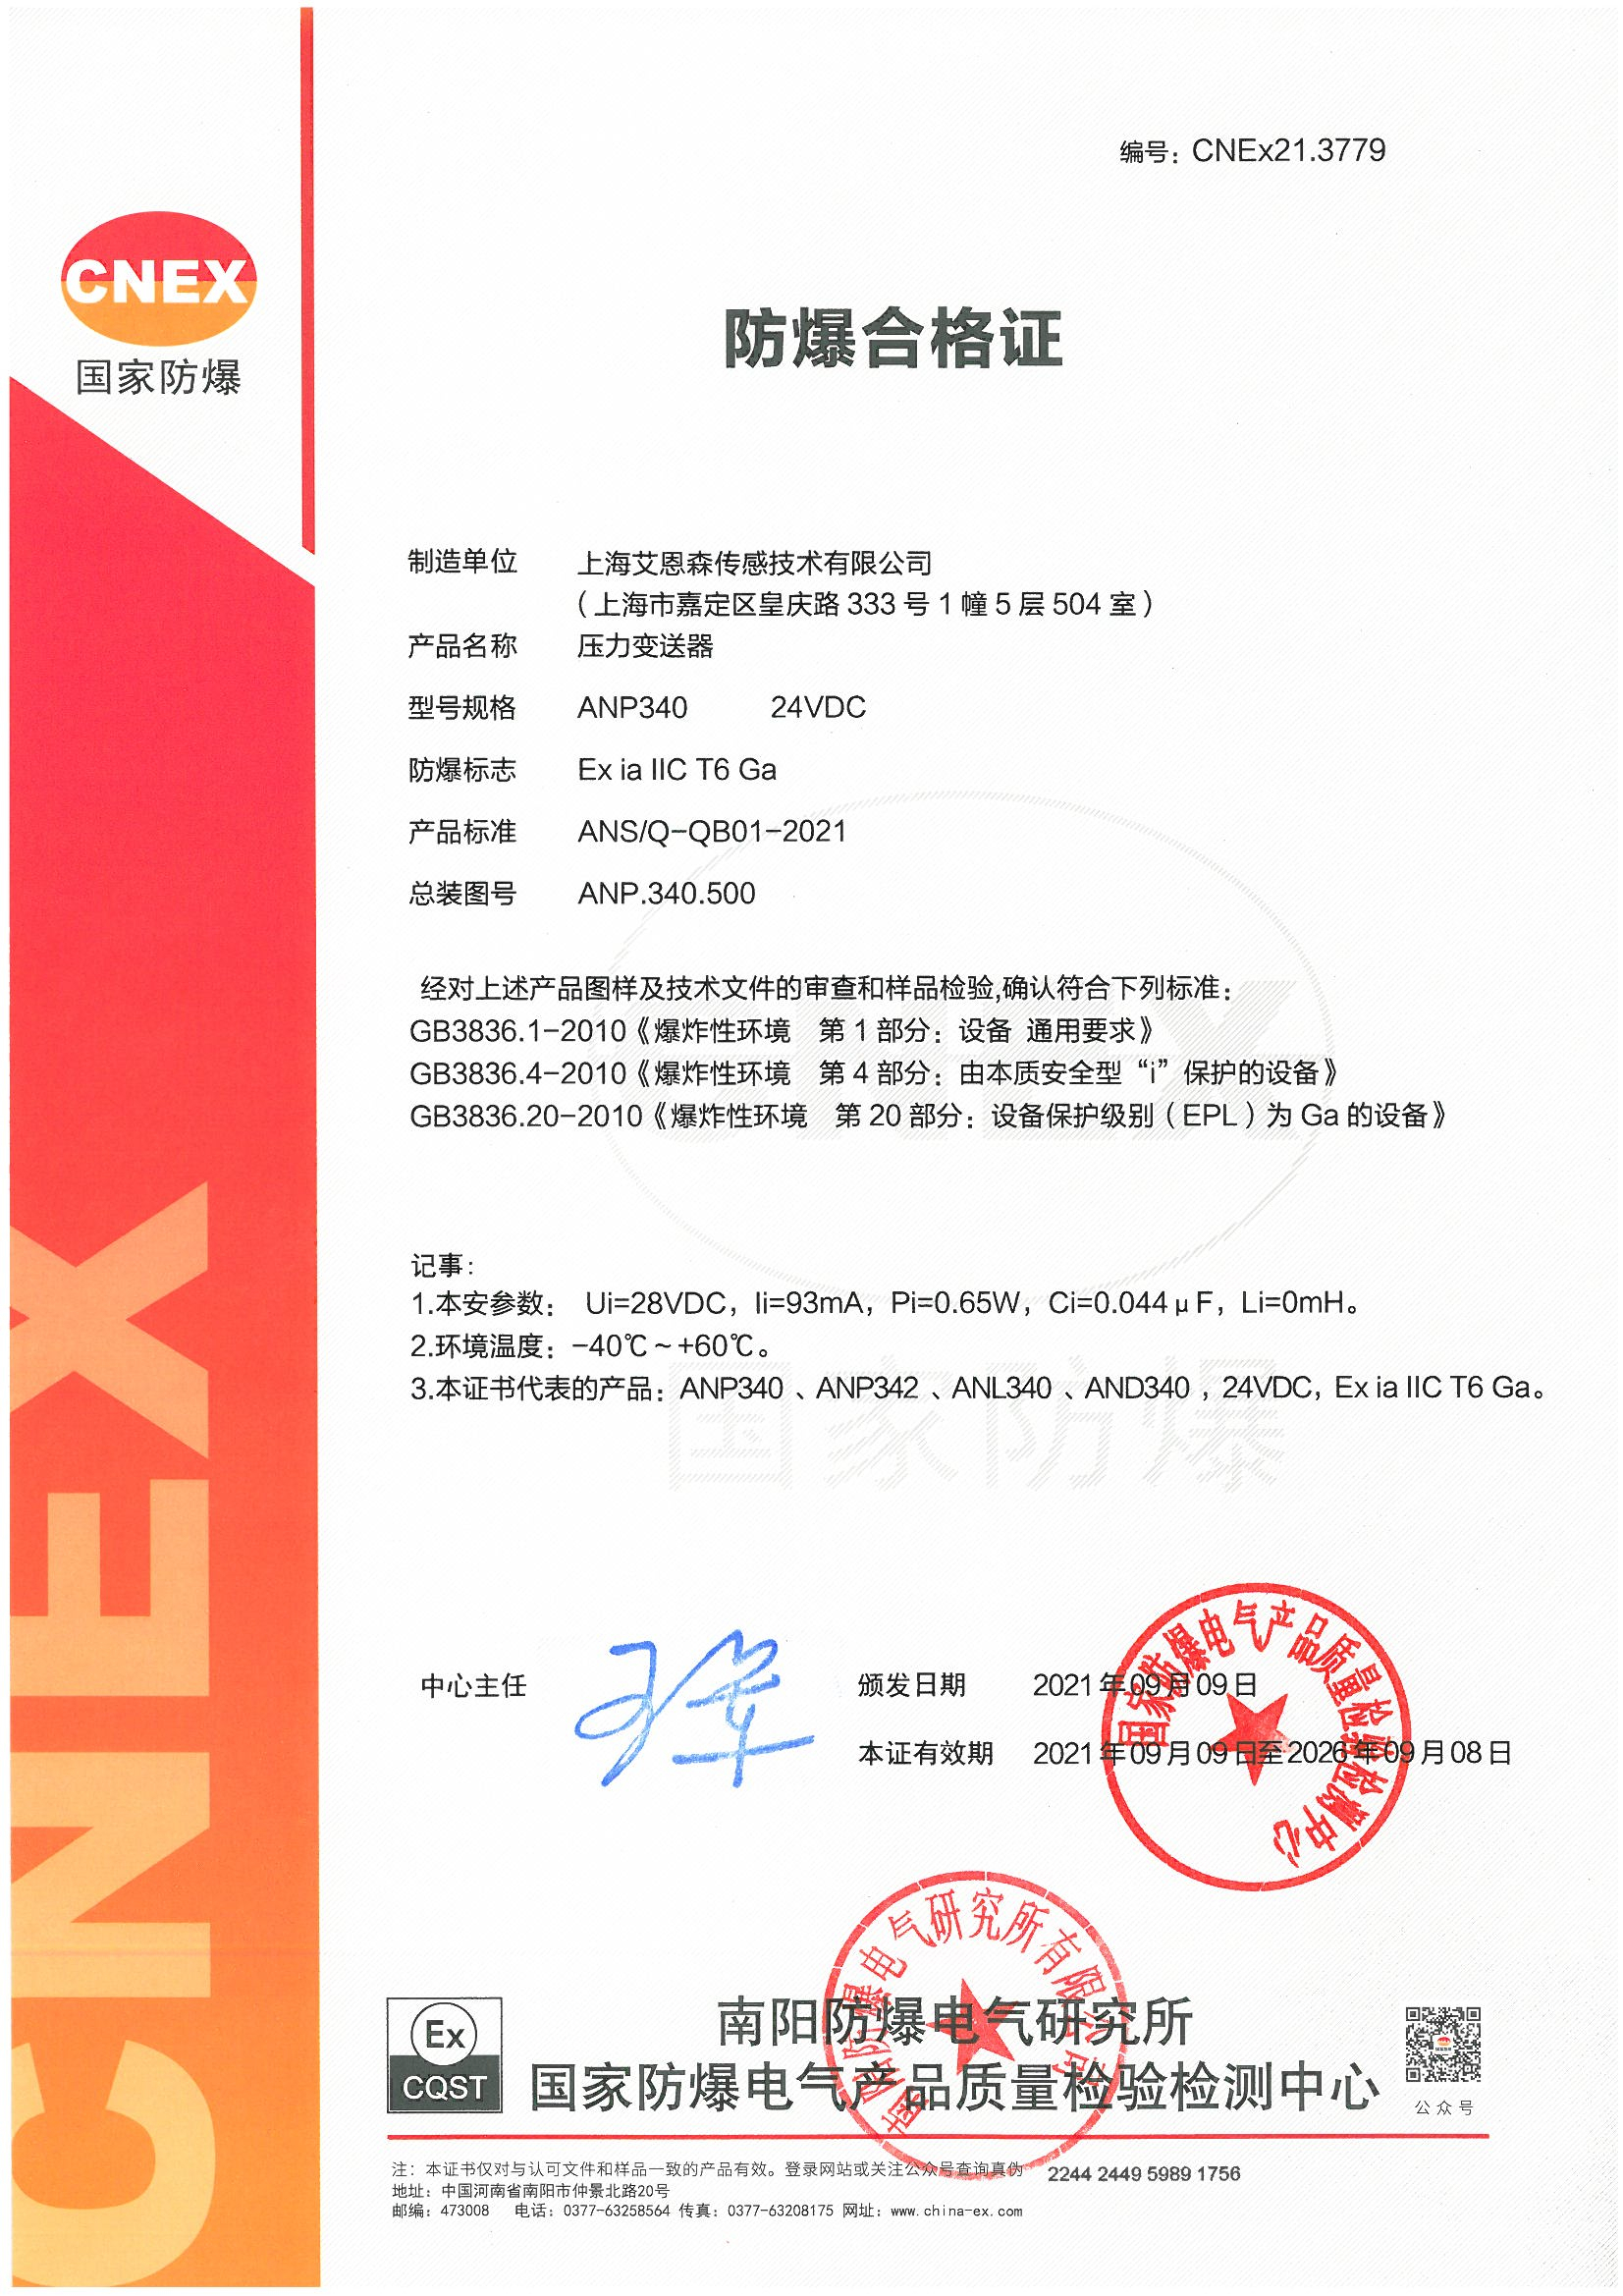 ANP340 Explosion proof certificate